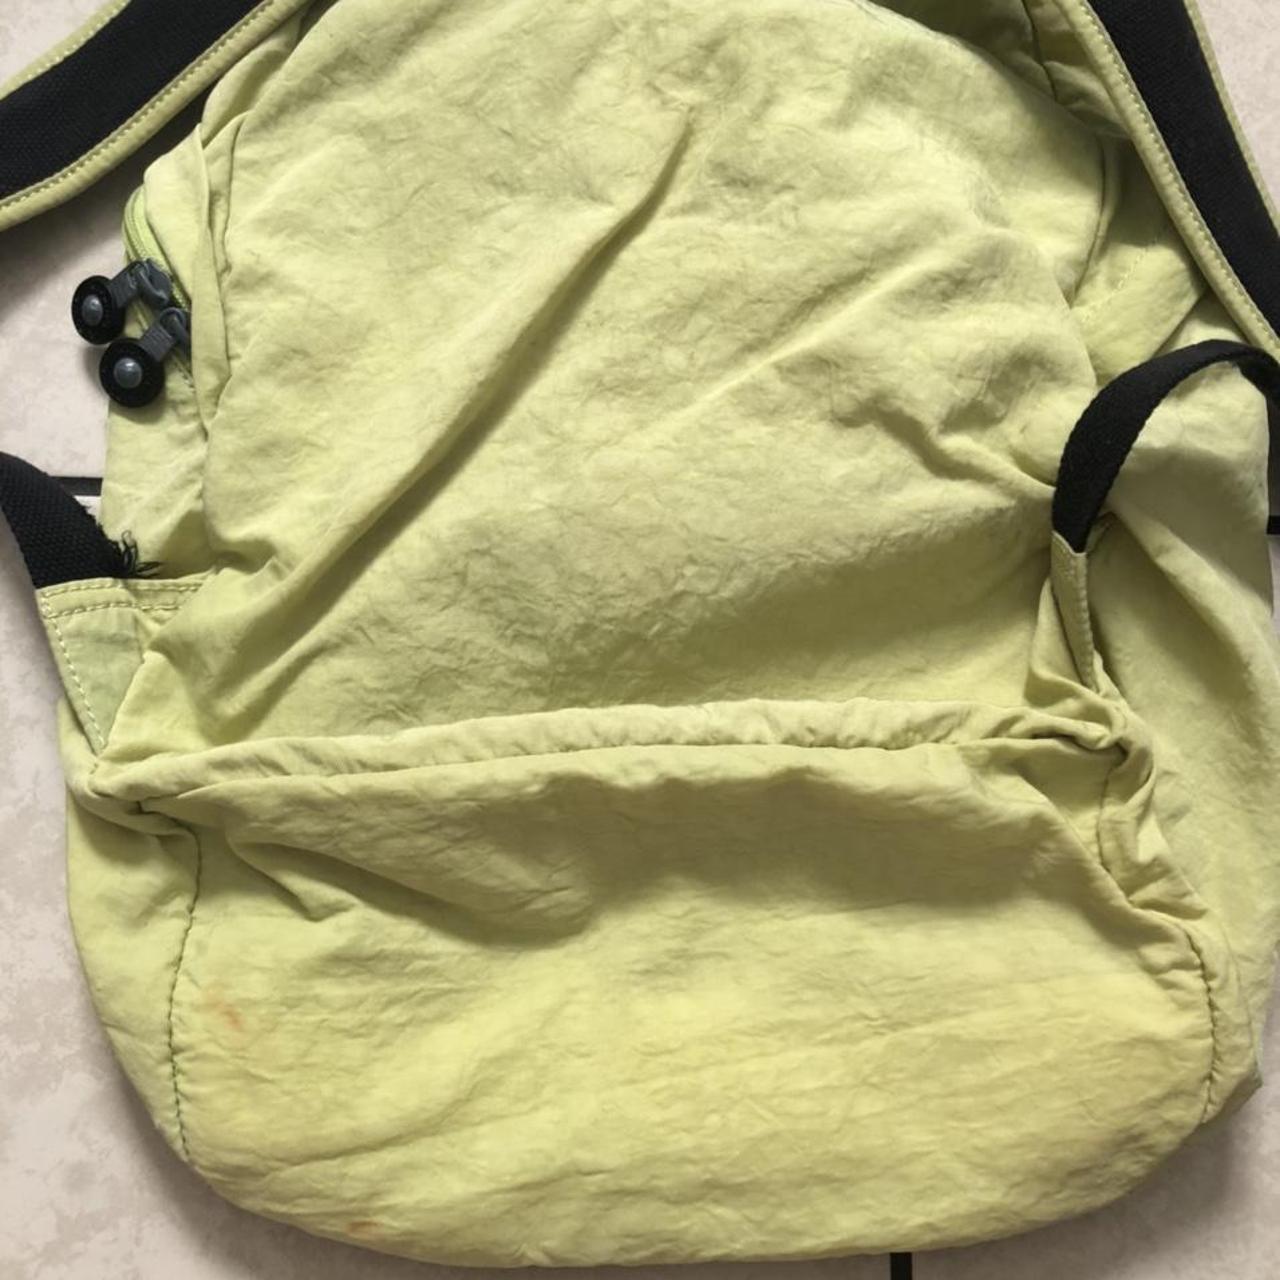 Product Image 3 - vintage kipling lime green backpack

has